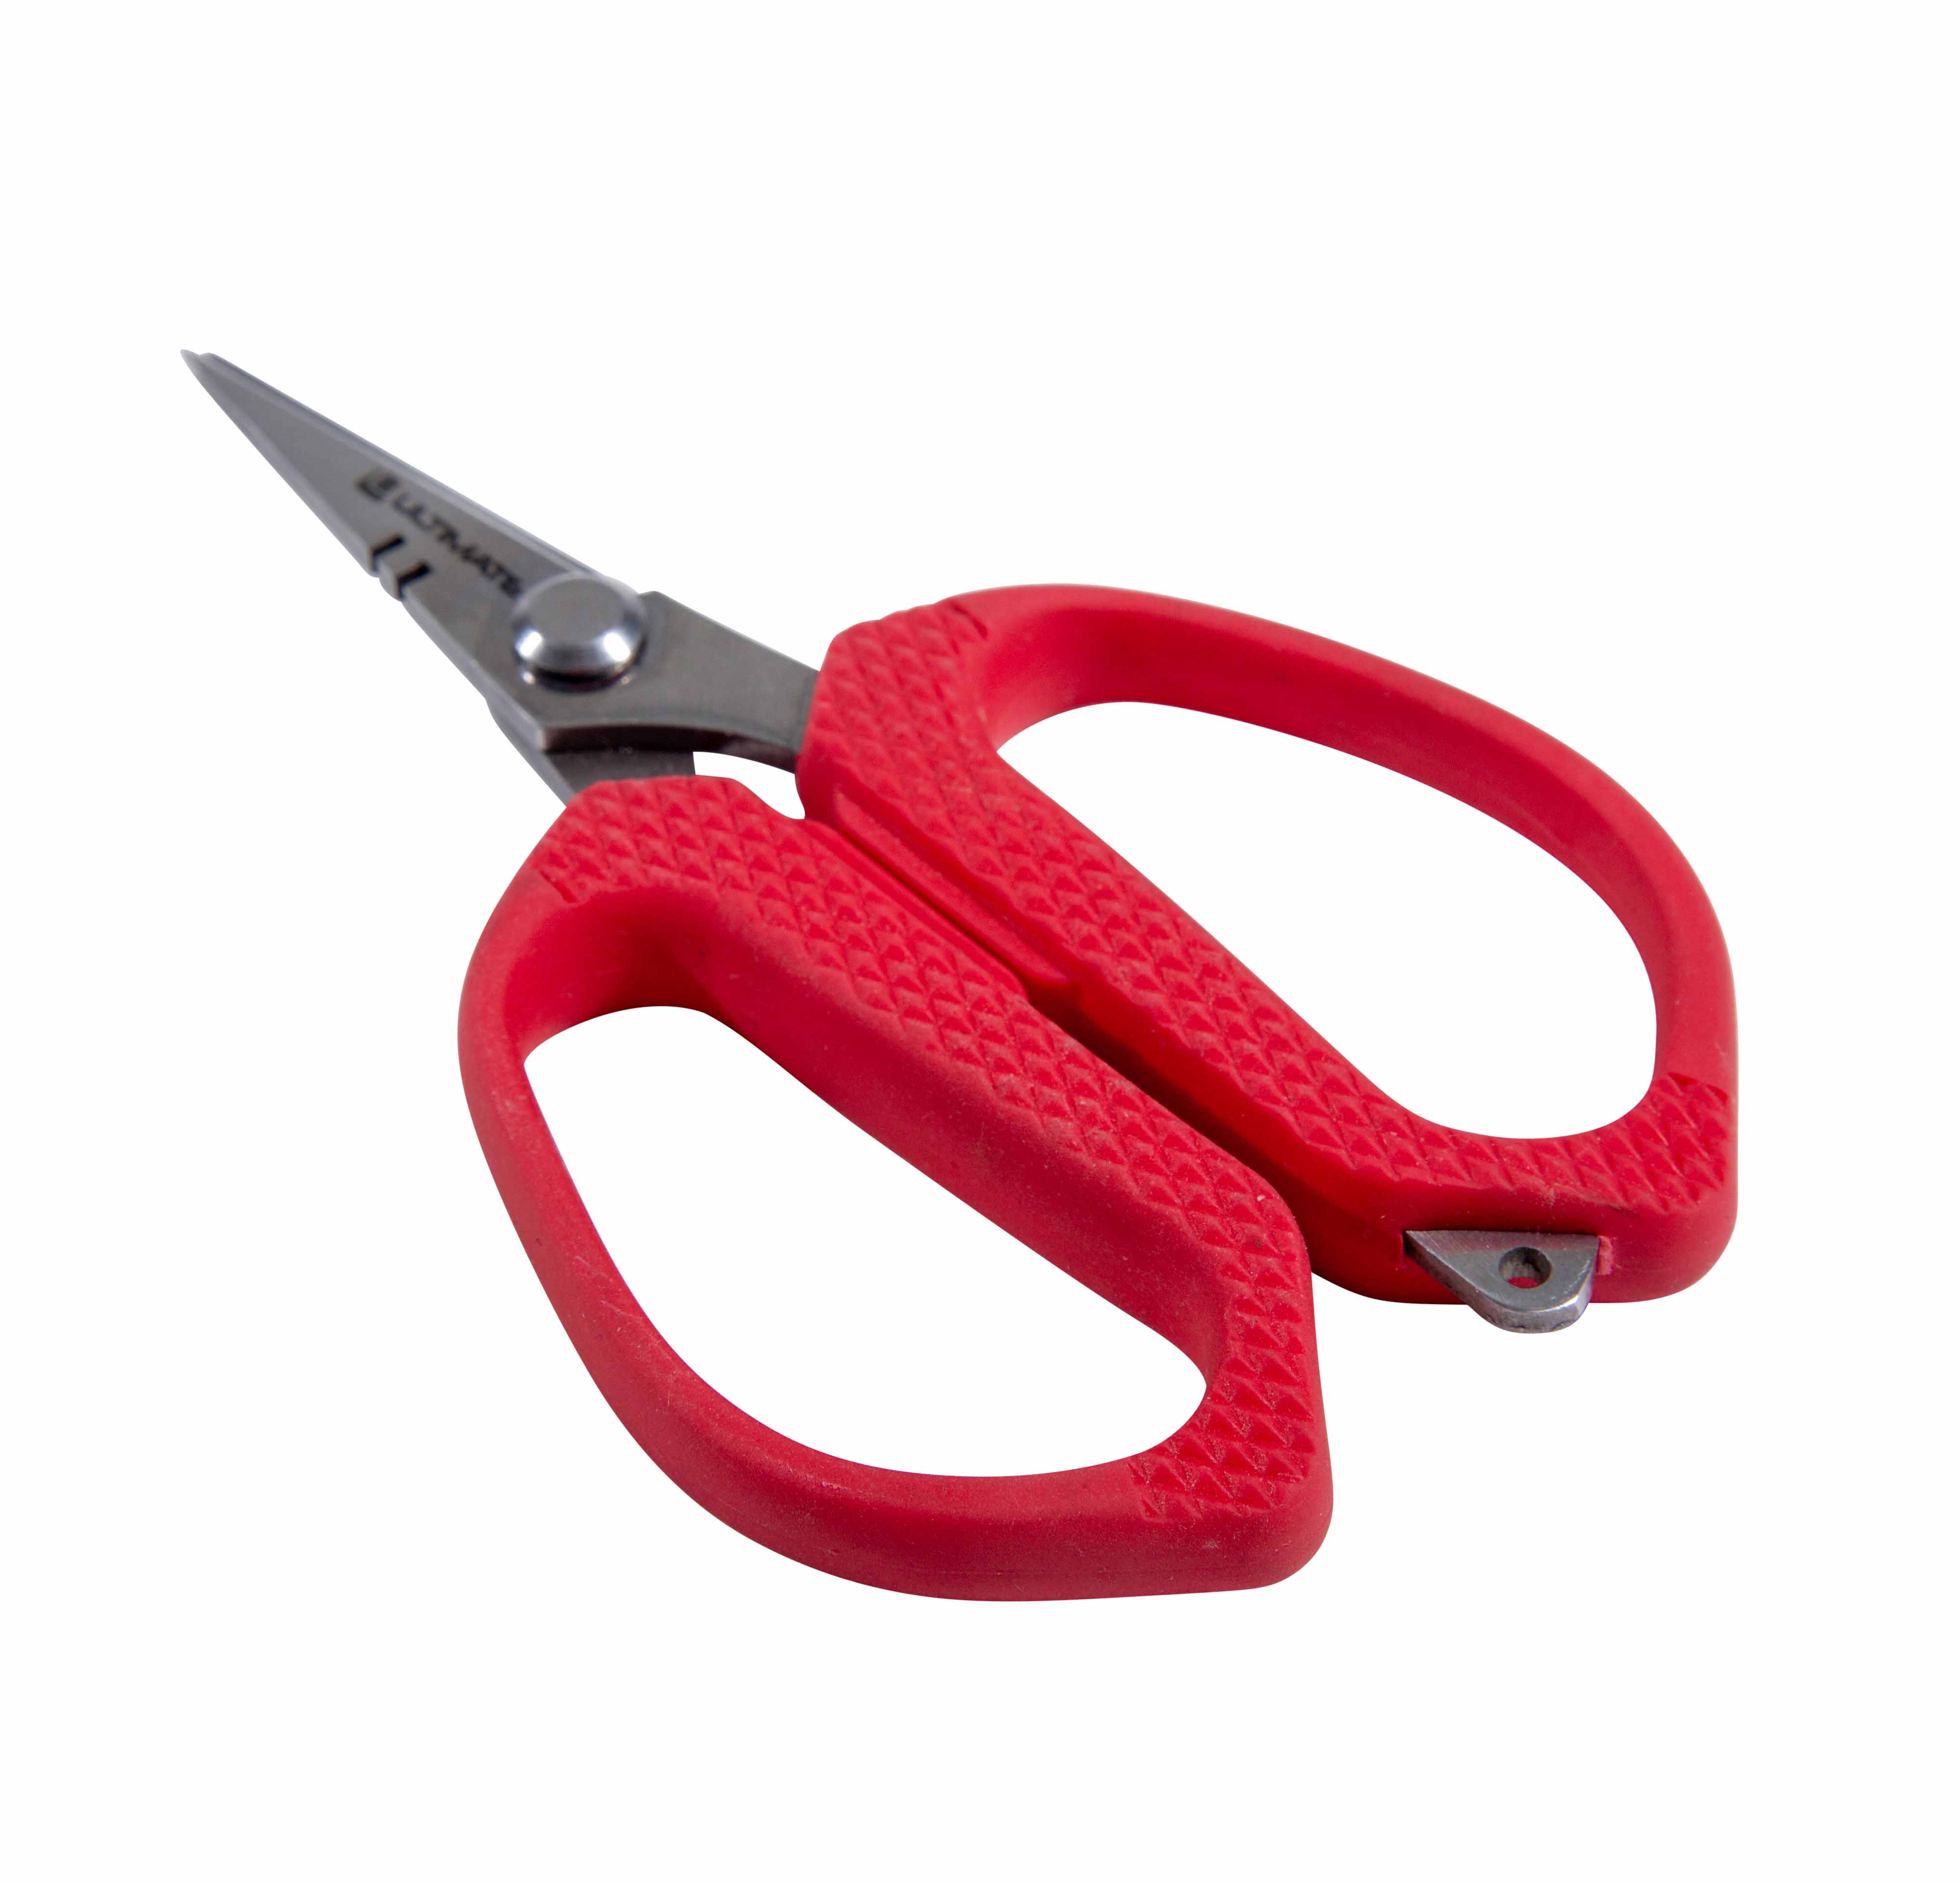 Ultimate Easy Grip Braid Scissors